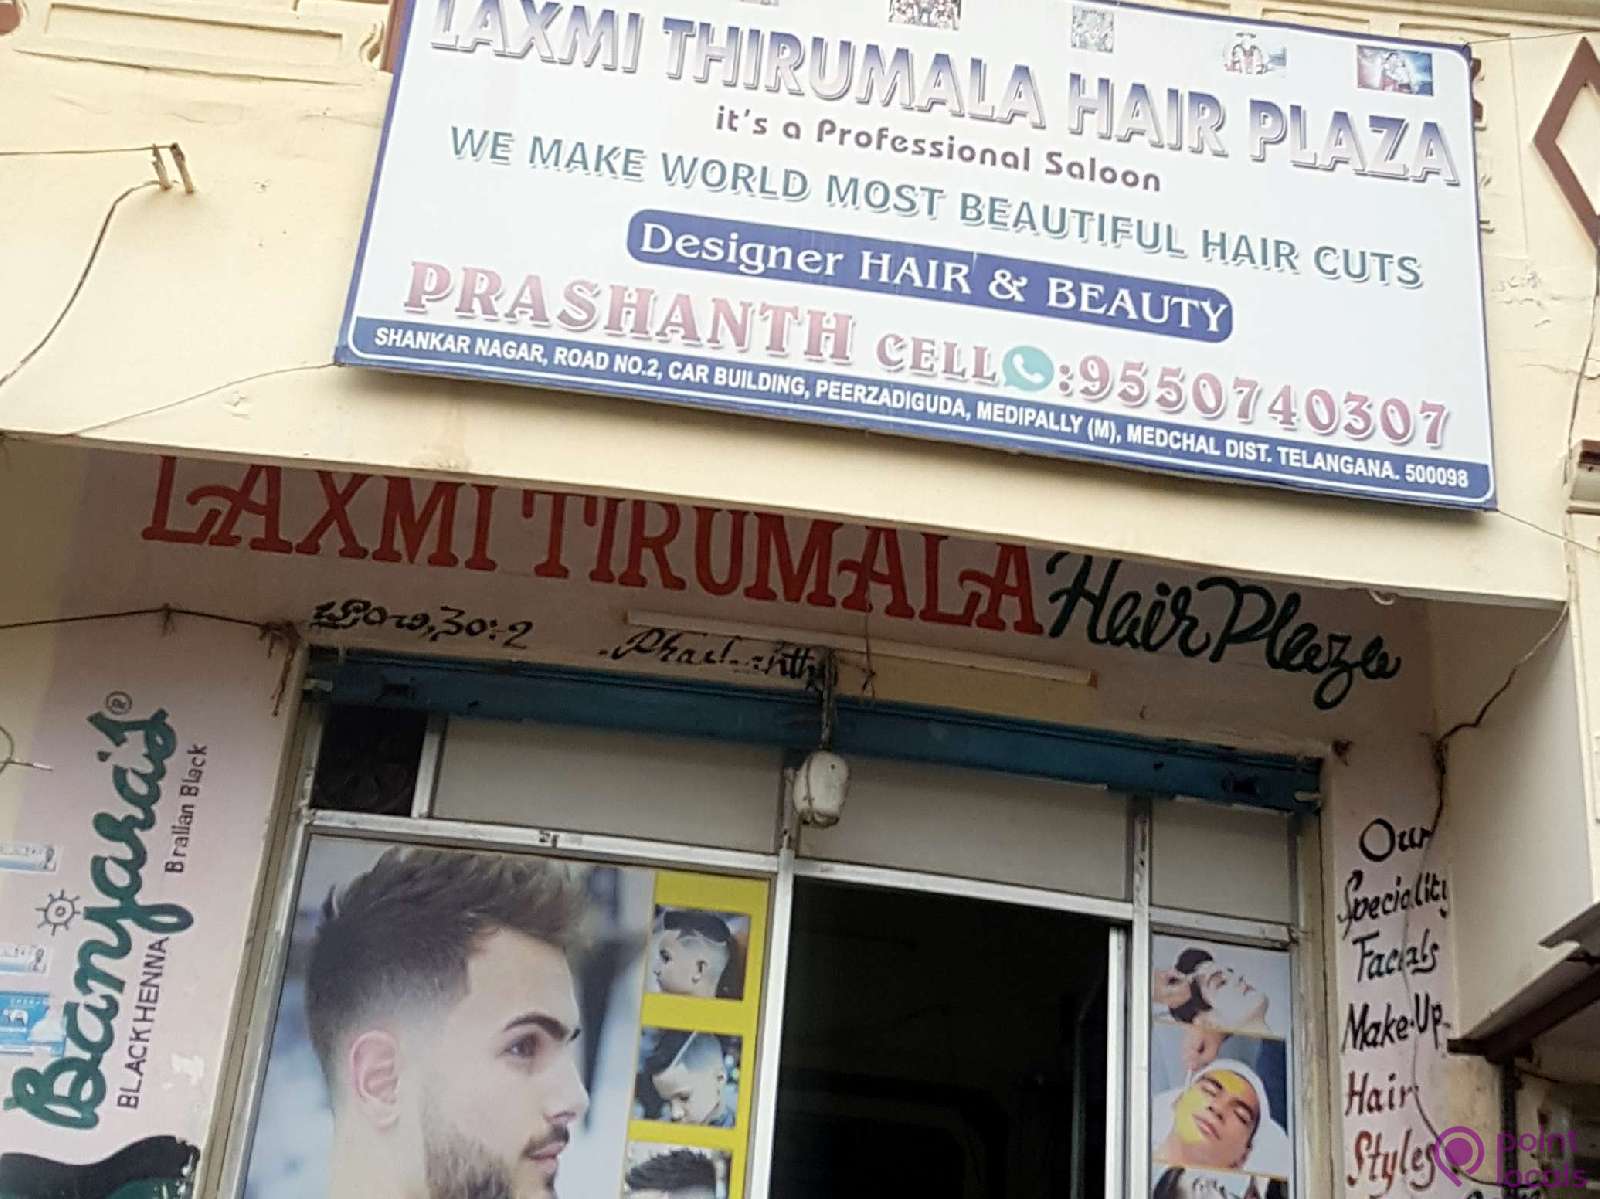 Laxmi Thirumala Hair Plaza - Hair Salon in Hyderabad,Telangana | Pointlocals